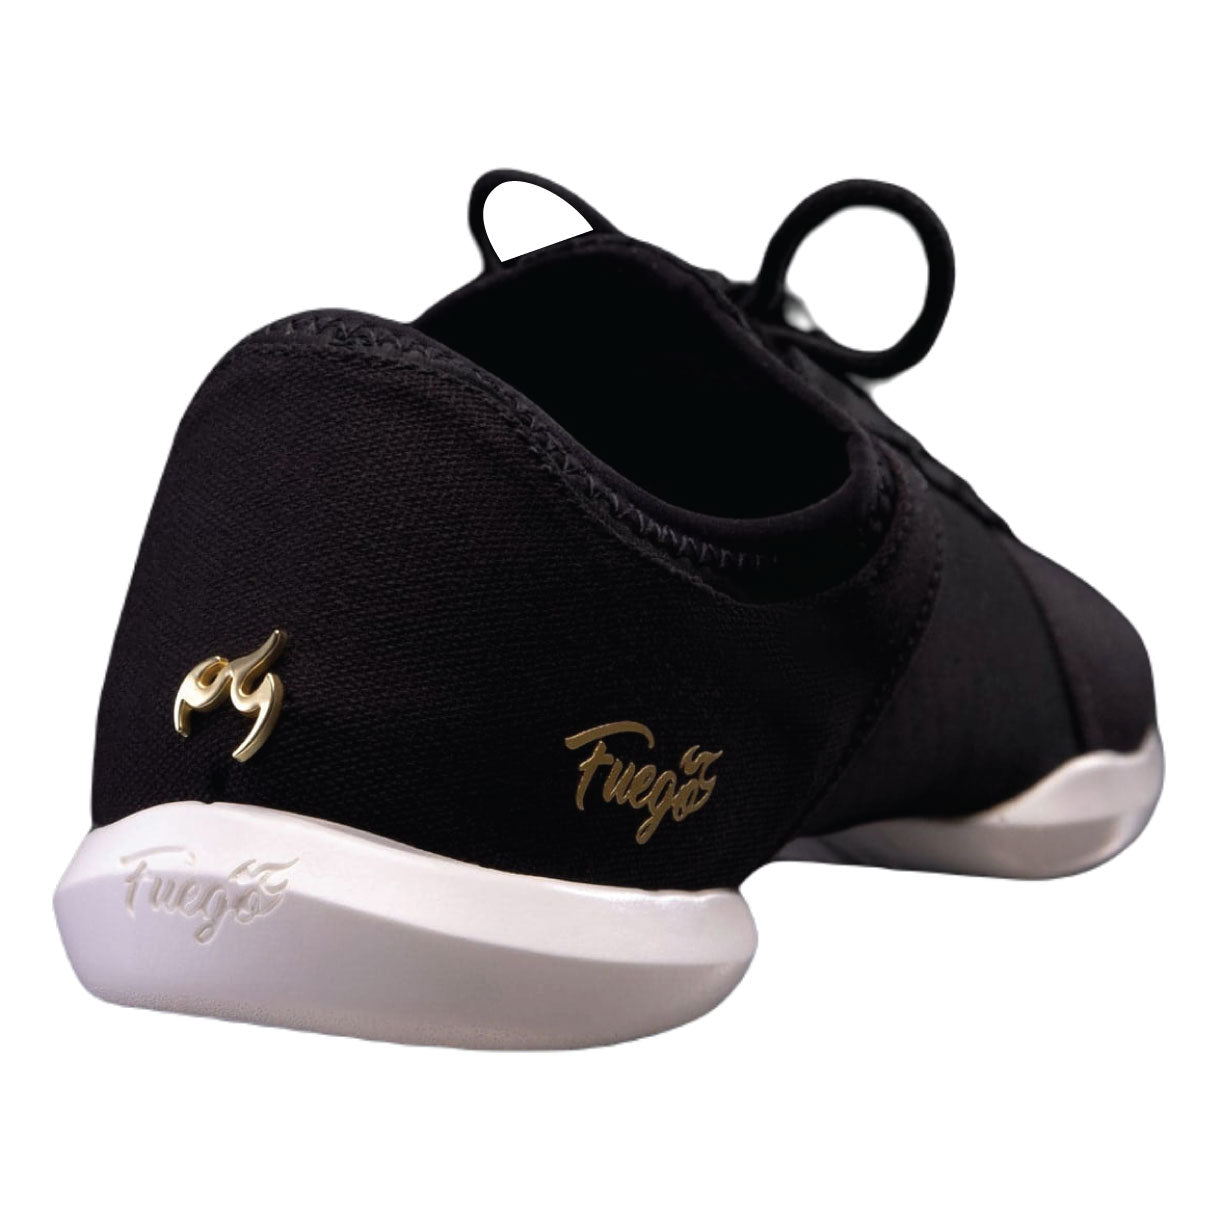 Sneaker Fuego Dance en noir avec saumure fendue blanche